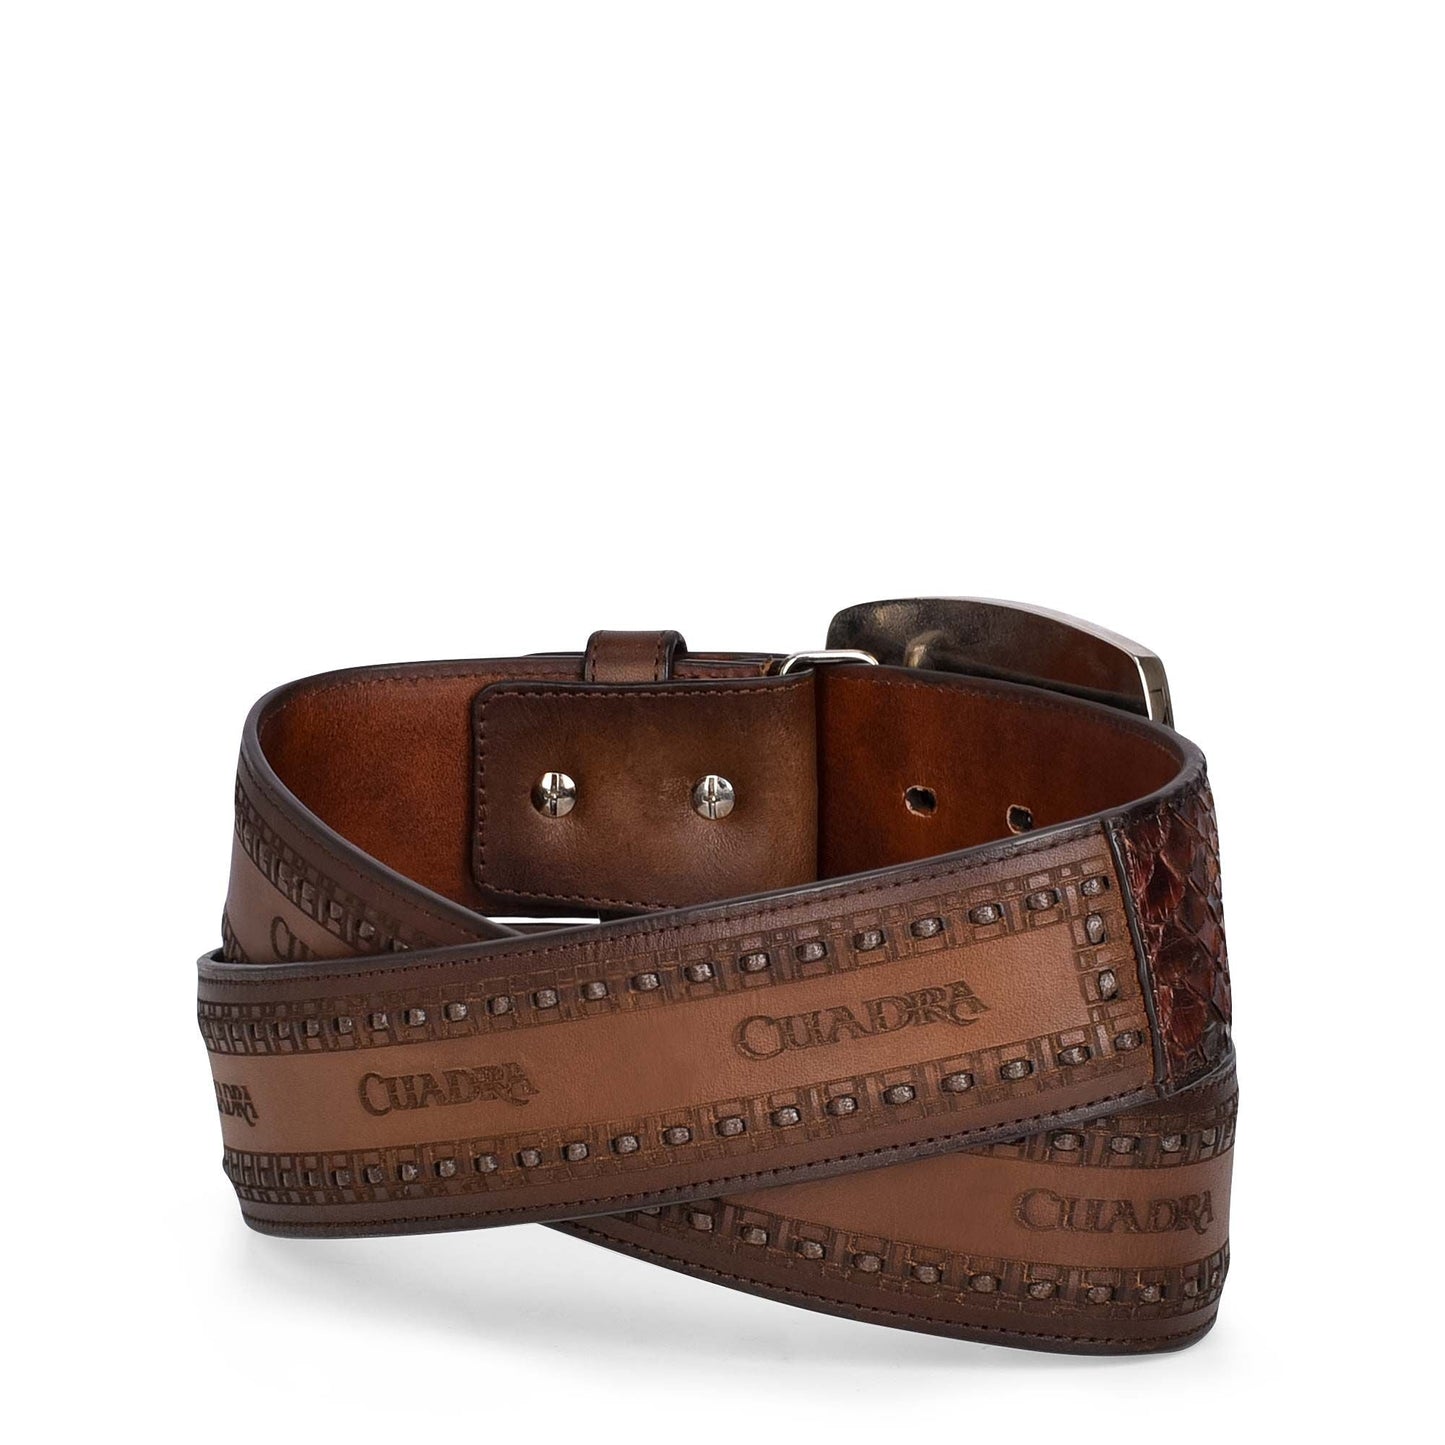 CV397PI - Cuadra chestnut brown fashion cowboy python leather belt for men-Kuet.us